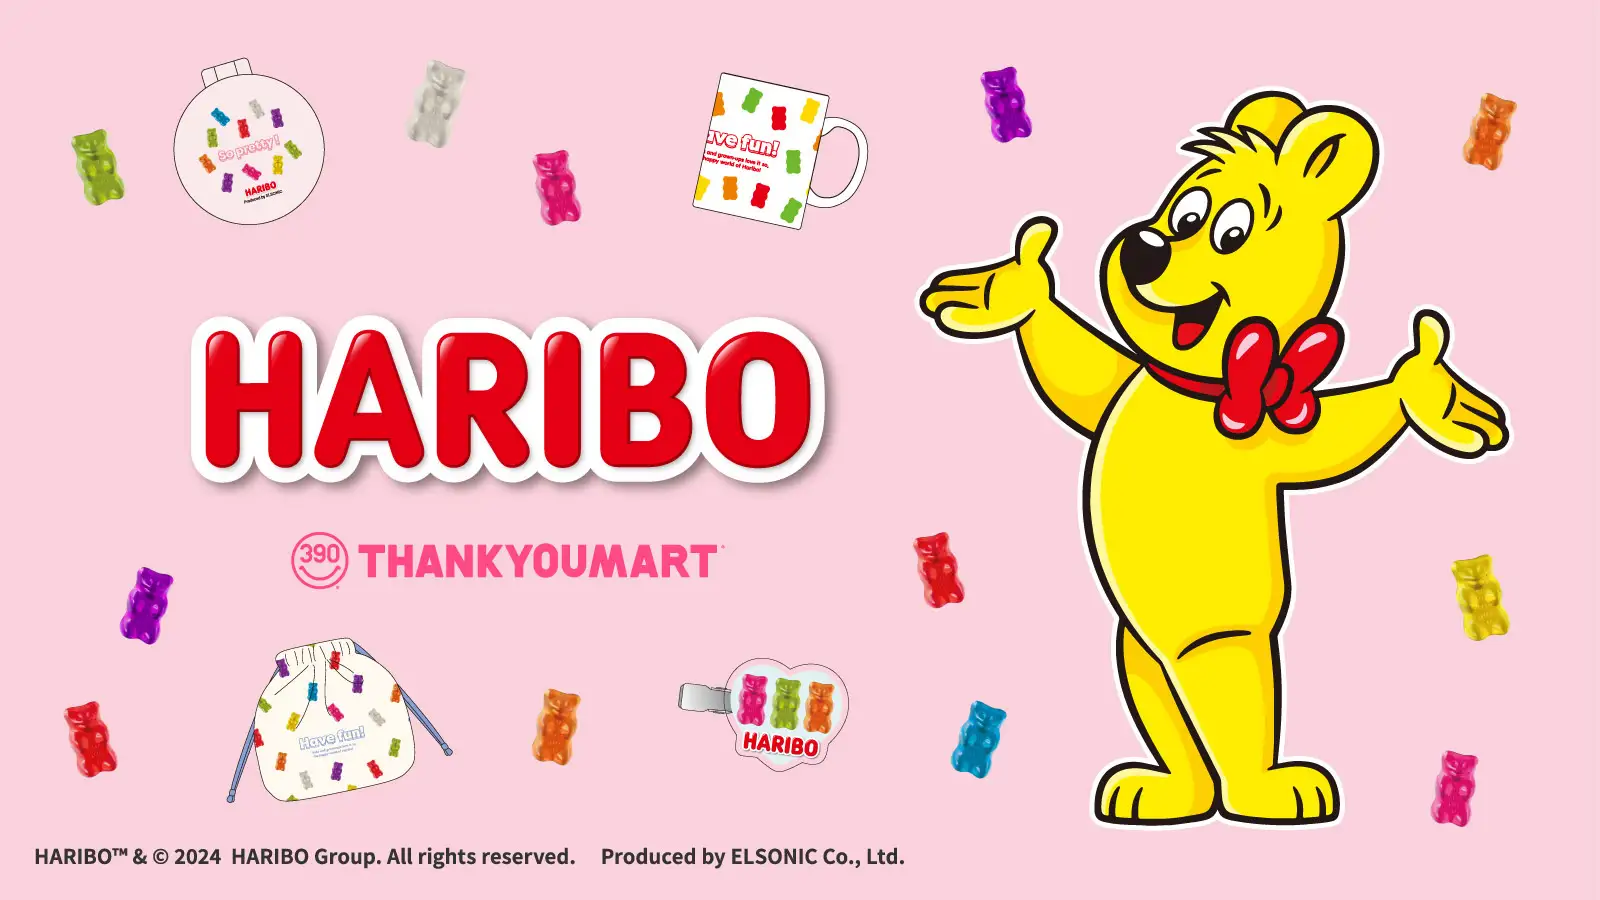 「HARIBO」とのコラボレーション雑貨がサンキューマートから新発売